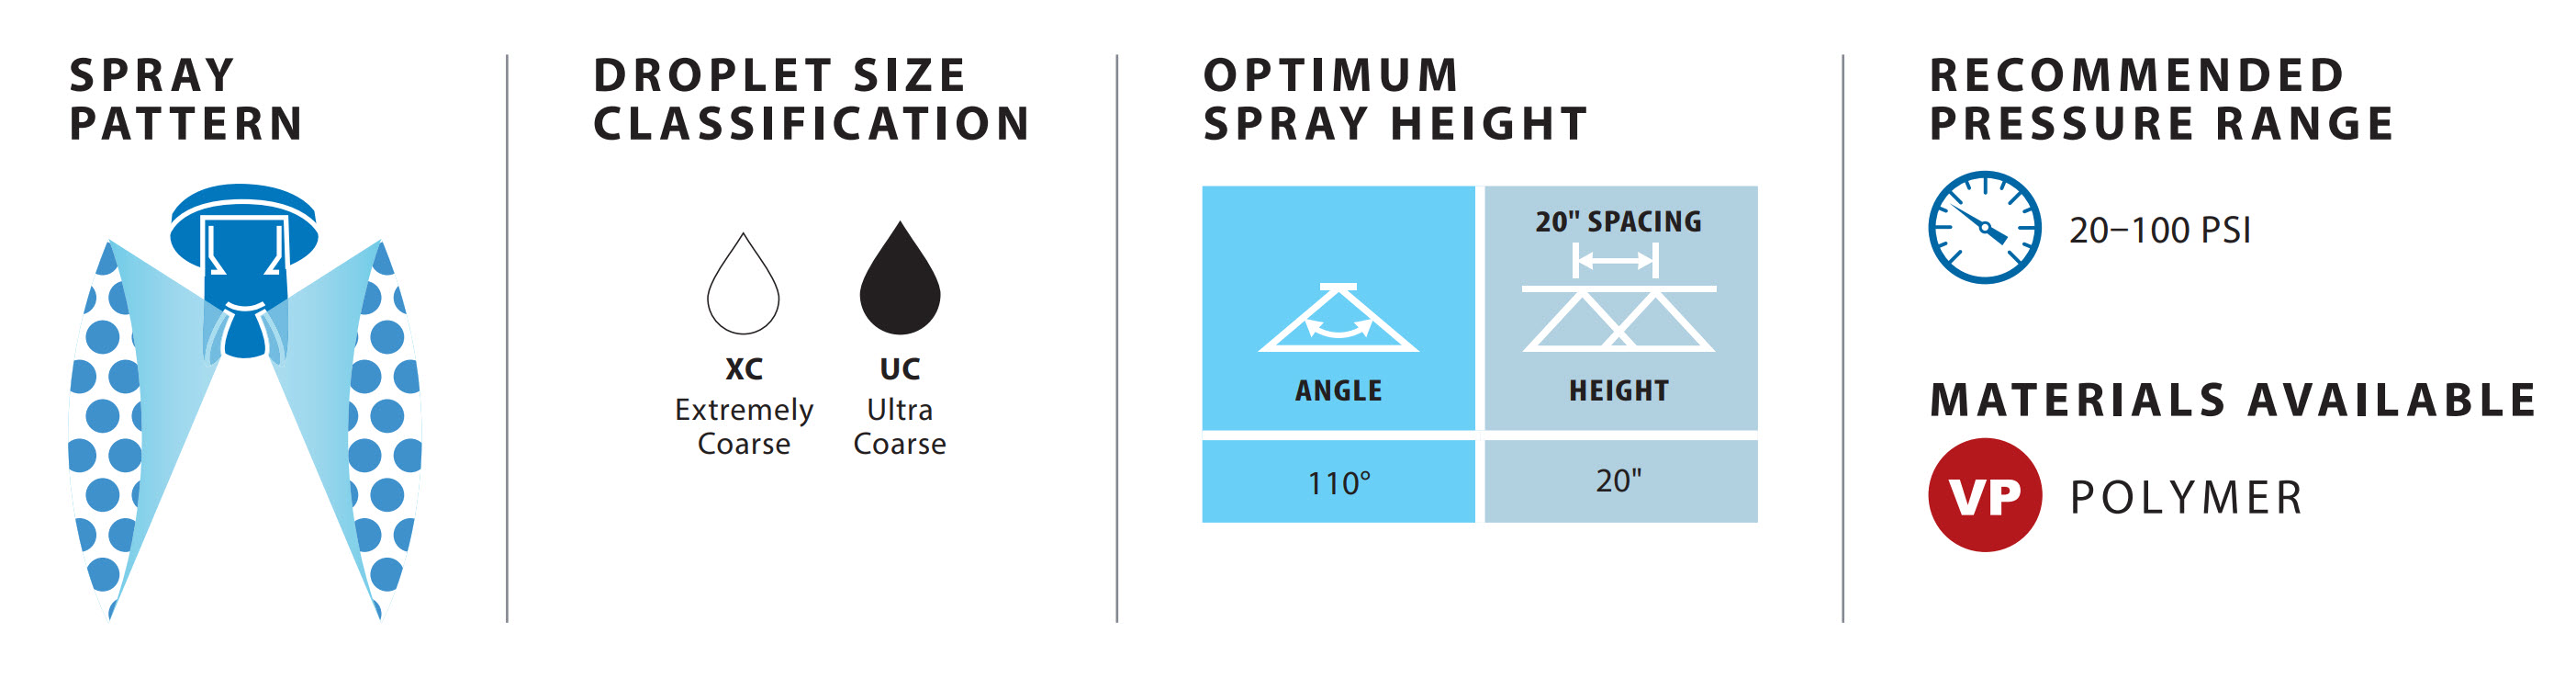 APTJ spray tip performance details